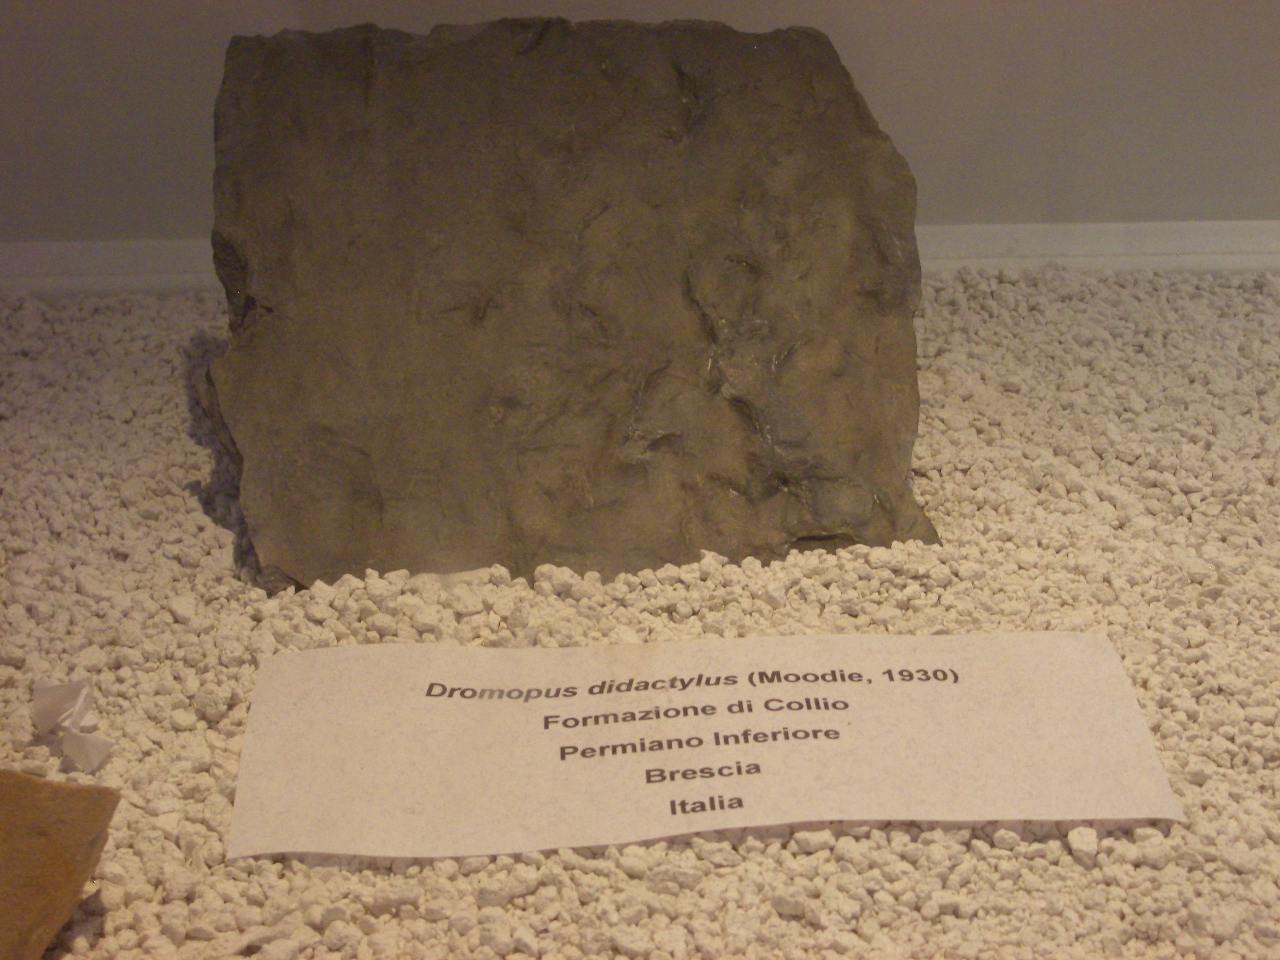 ichnofossile (impronta su superficie, esemplare)